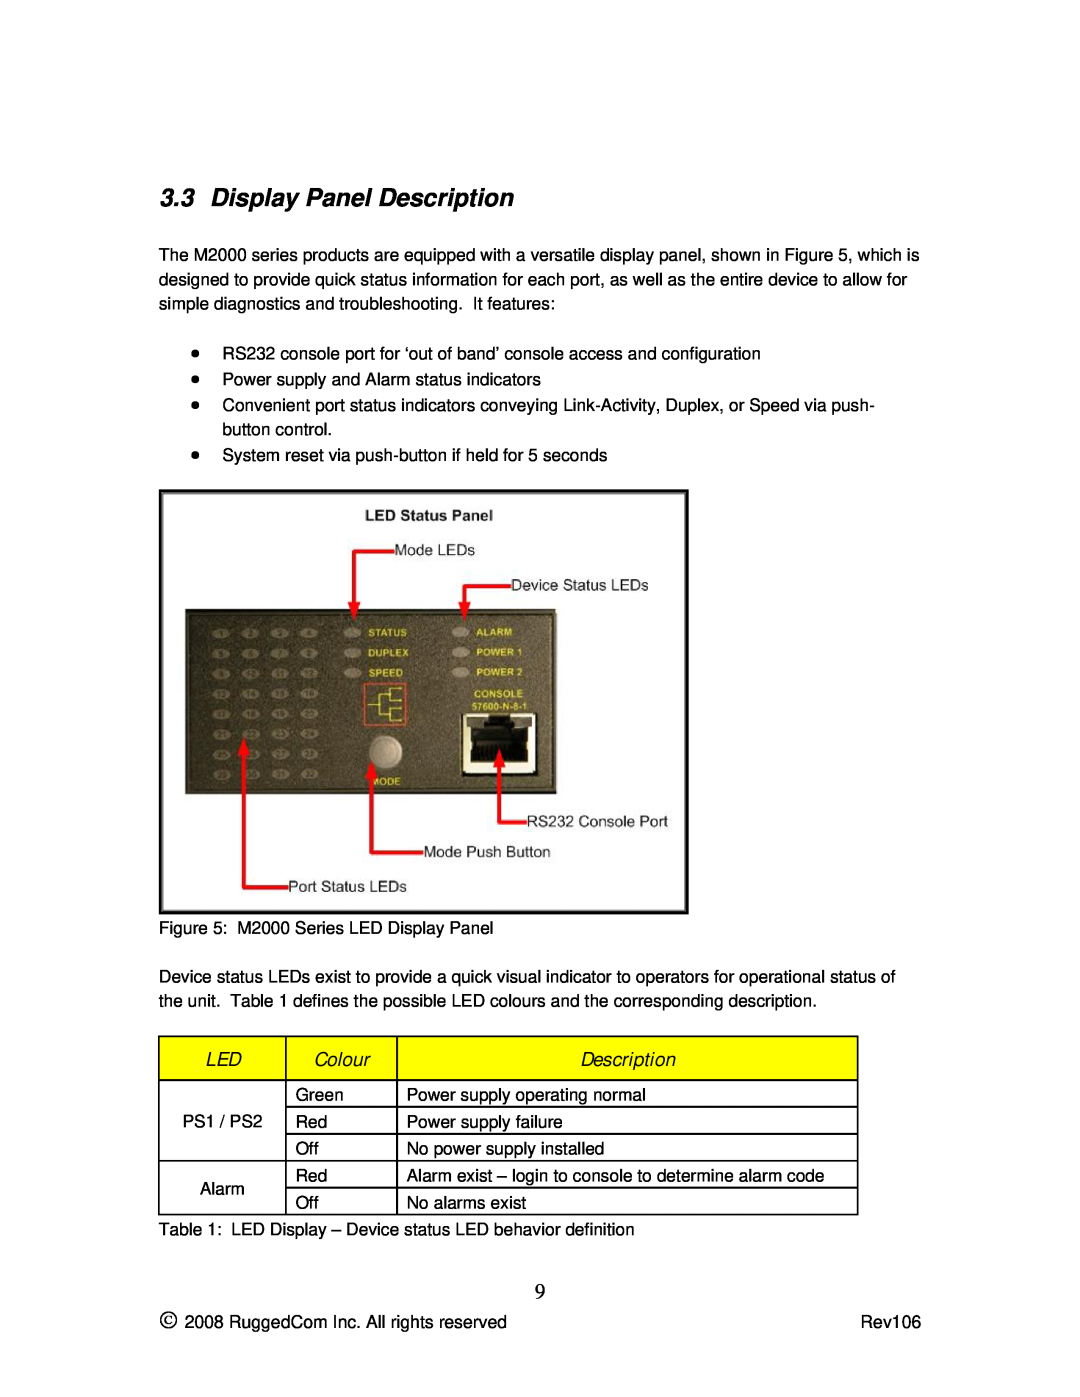 RuggedCom M2100 manual Display Panel Description, Colour 